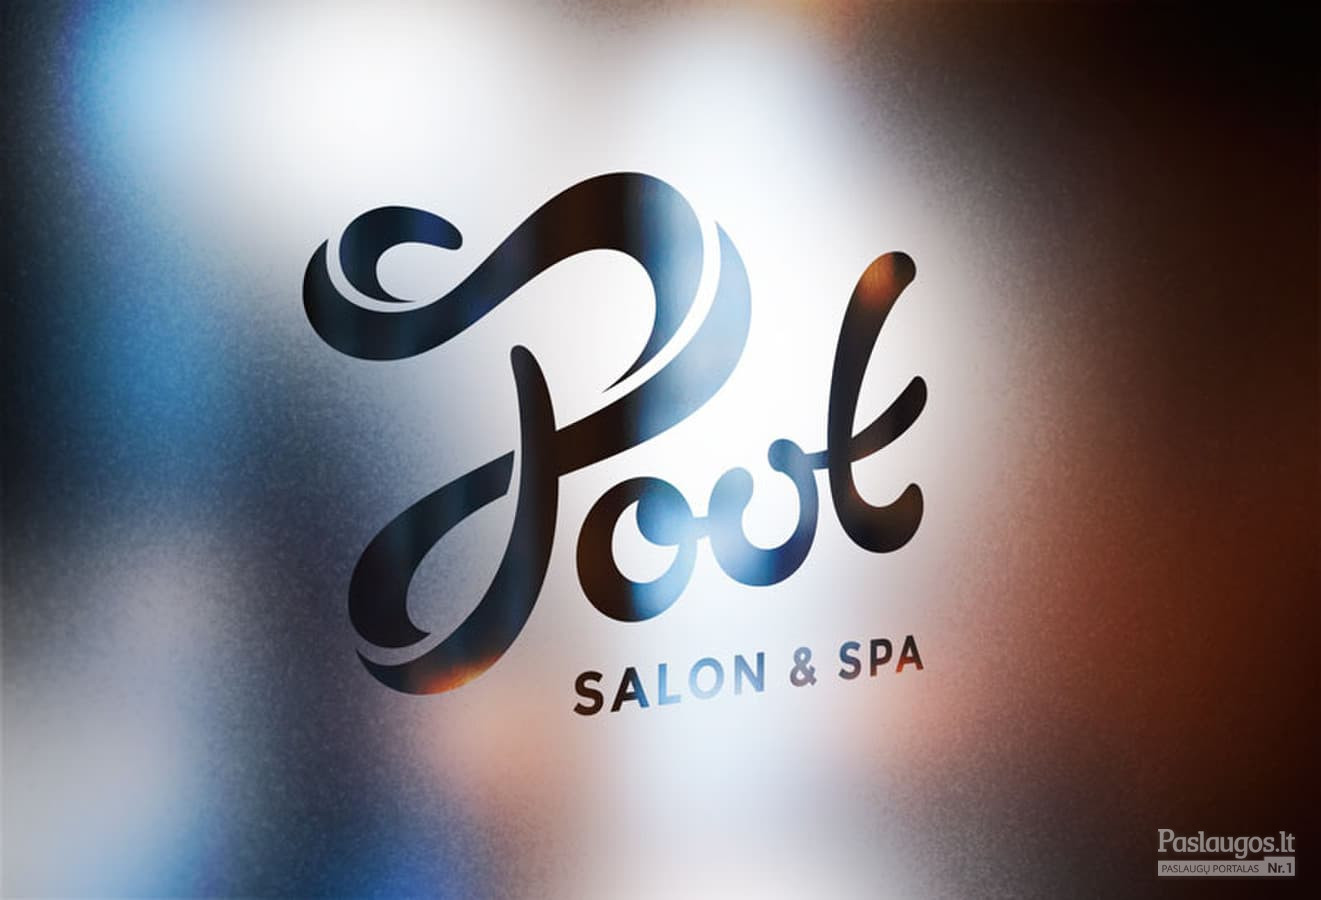 Pooth - SPA Salonas / Logotipas / Kostas Vasarevicius - kostazzz@gmail.com